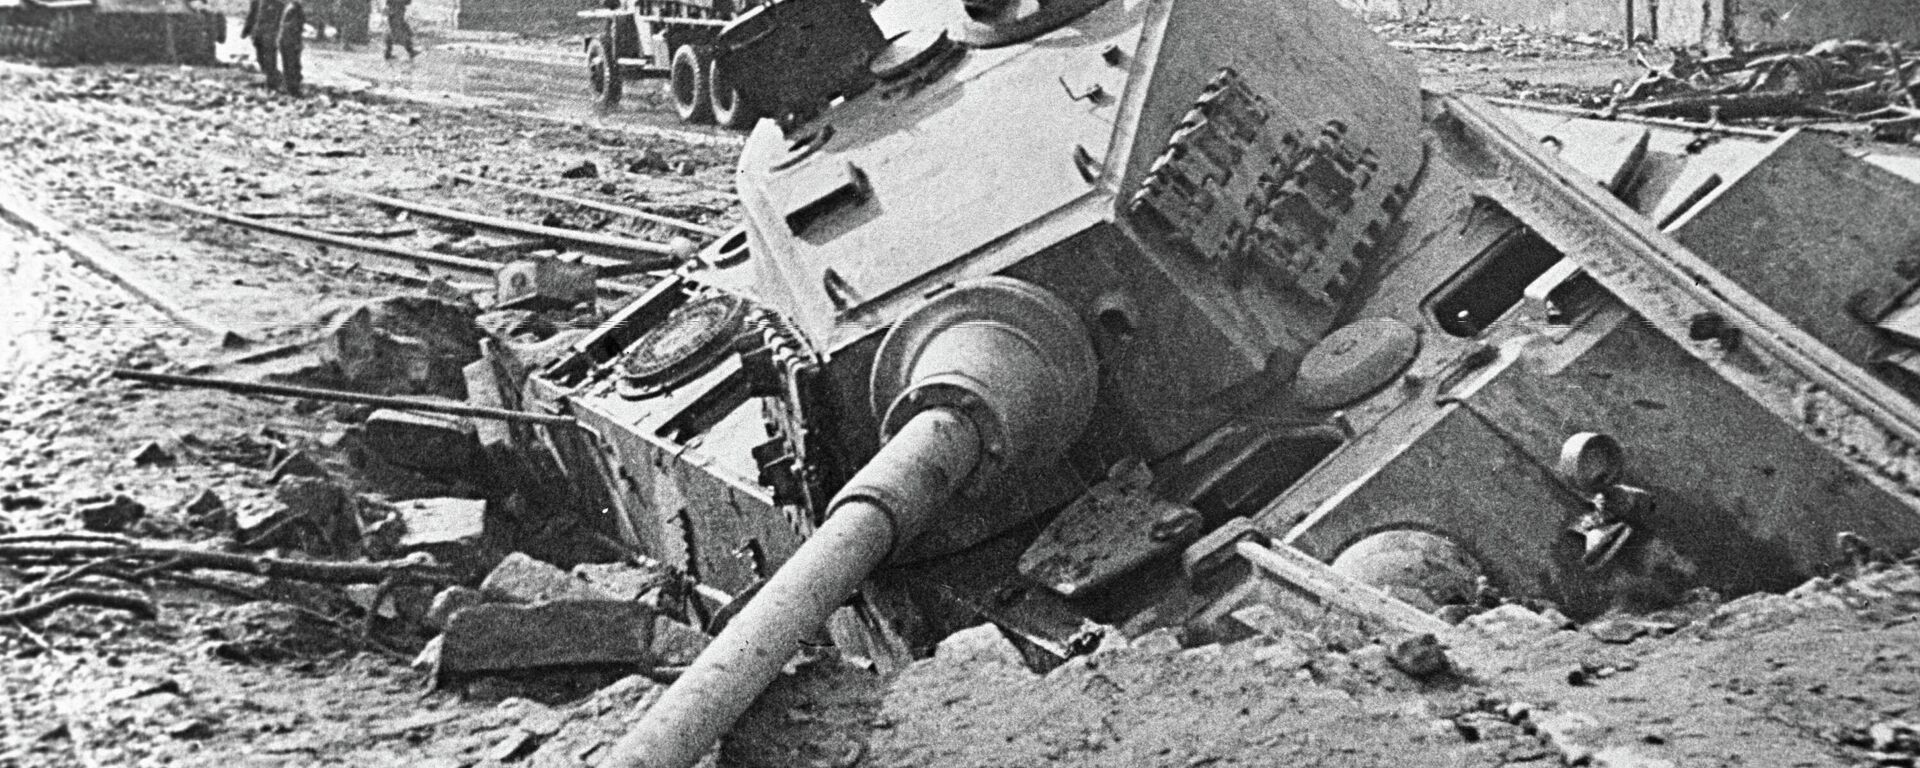 Smūgį patyręs vokiečių tankas Berlyno gatvėje - Sputnik Lietuva, 1920, 14.07.2021